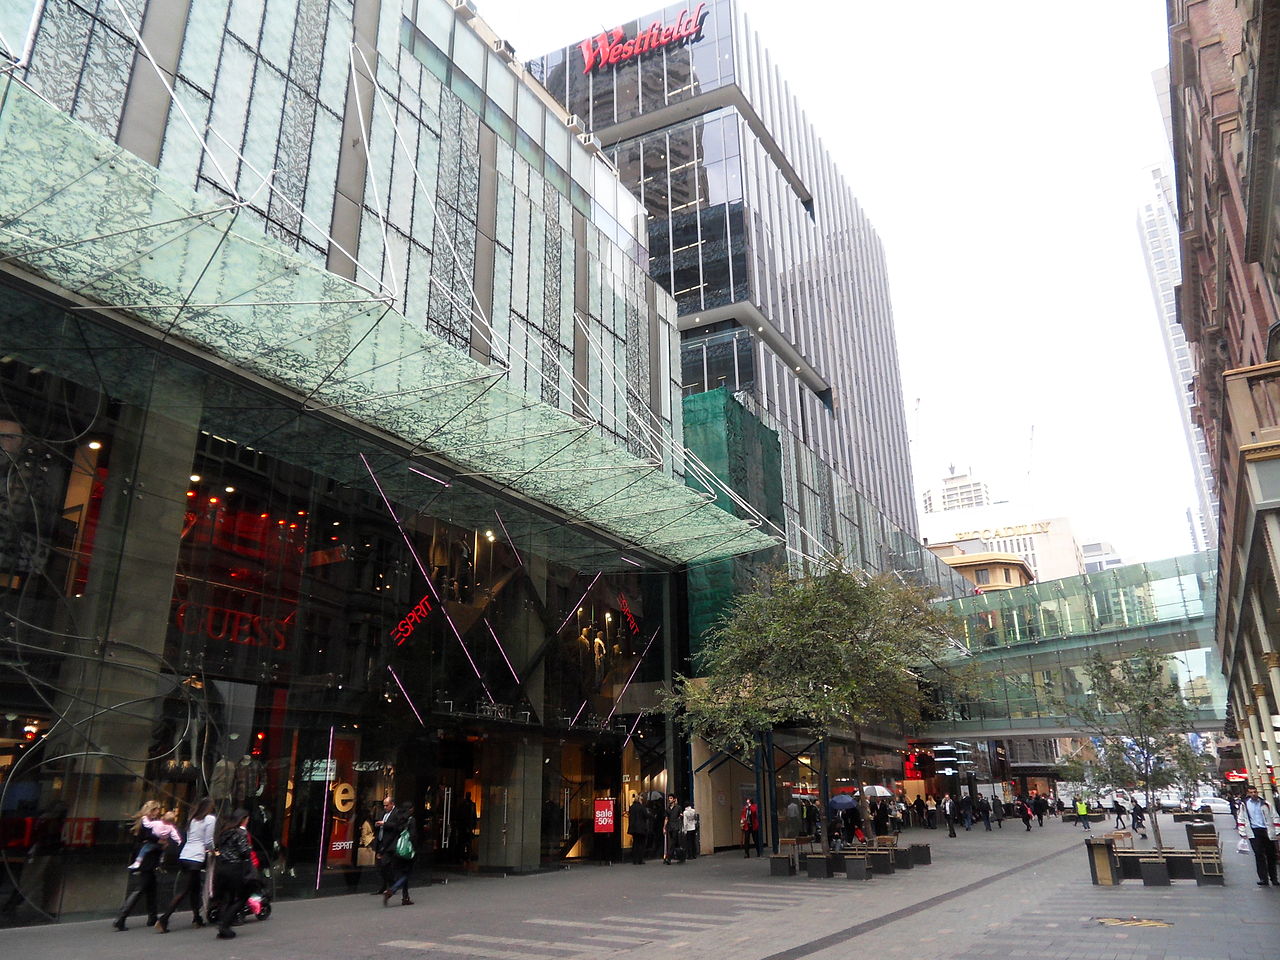 A view of Pitt Street Mall in Sydney.